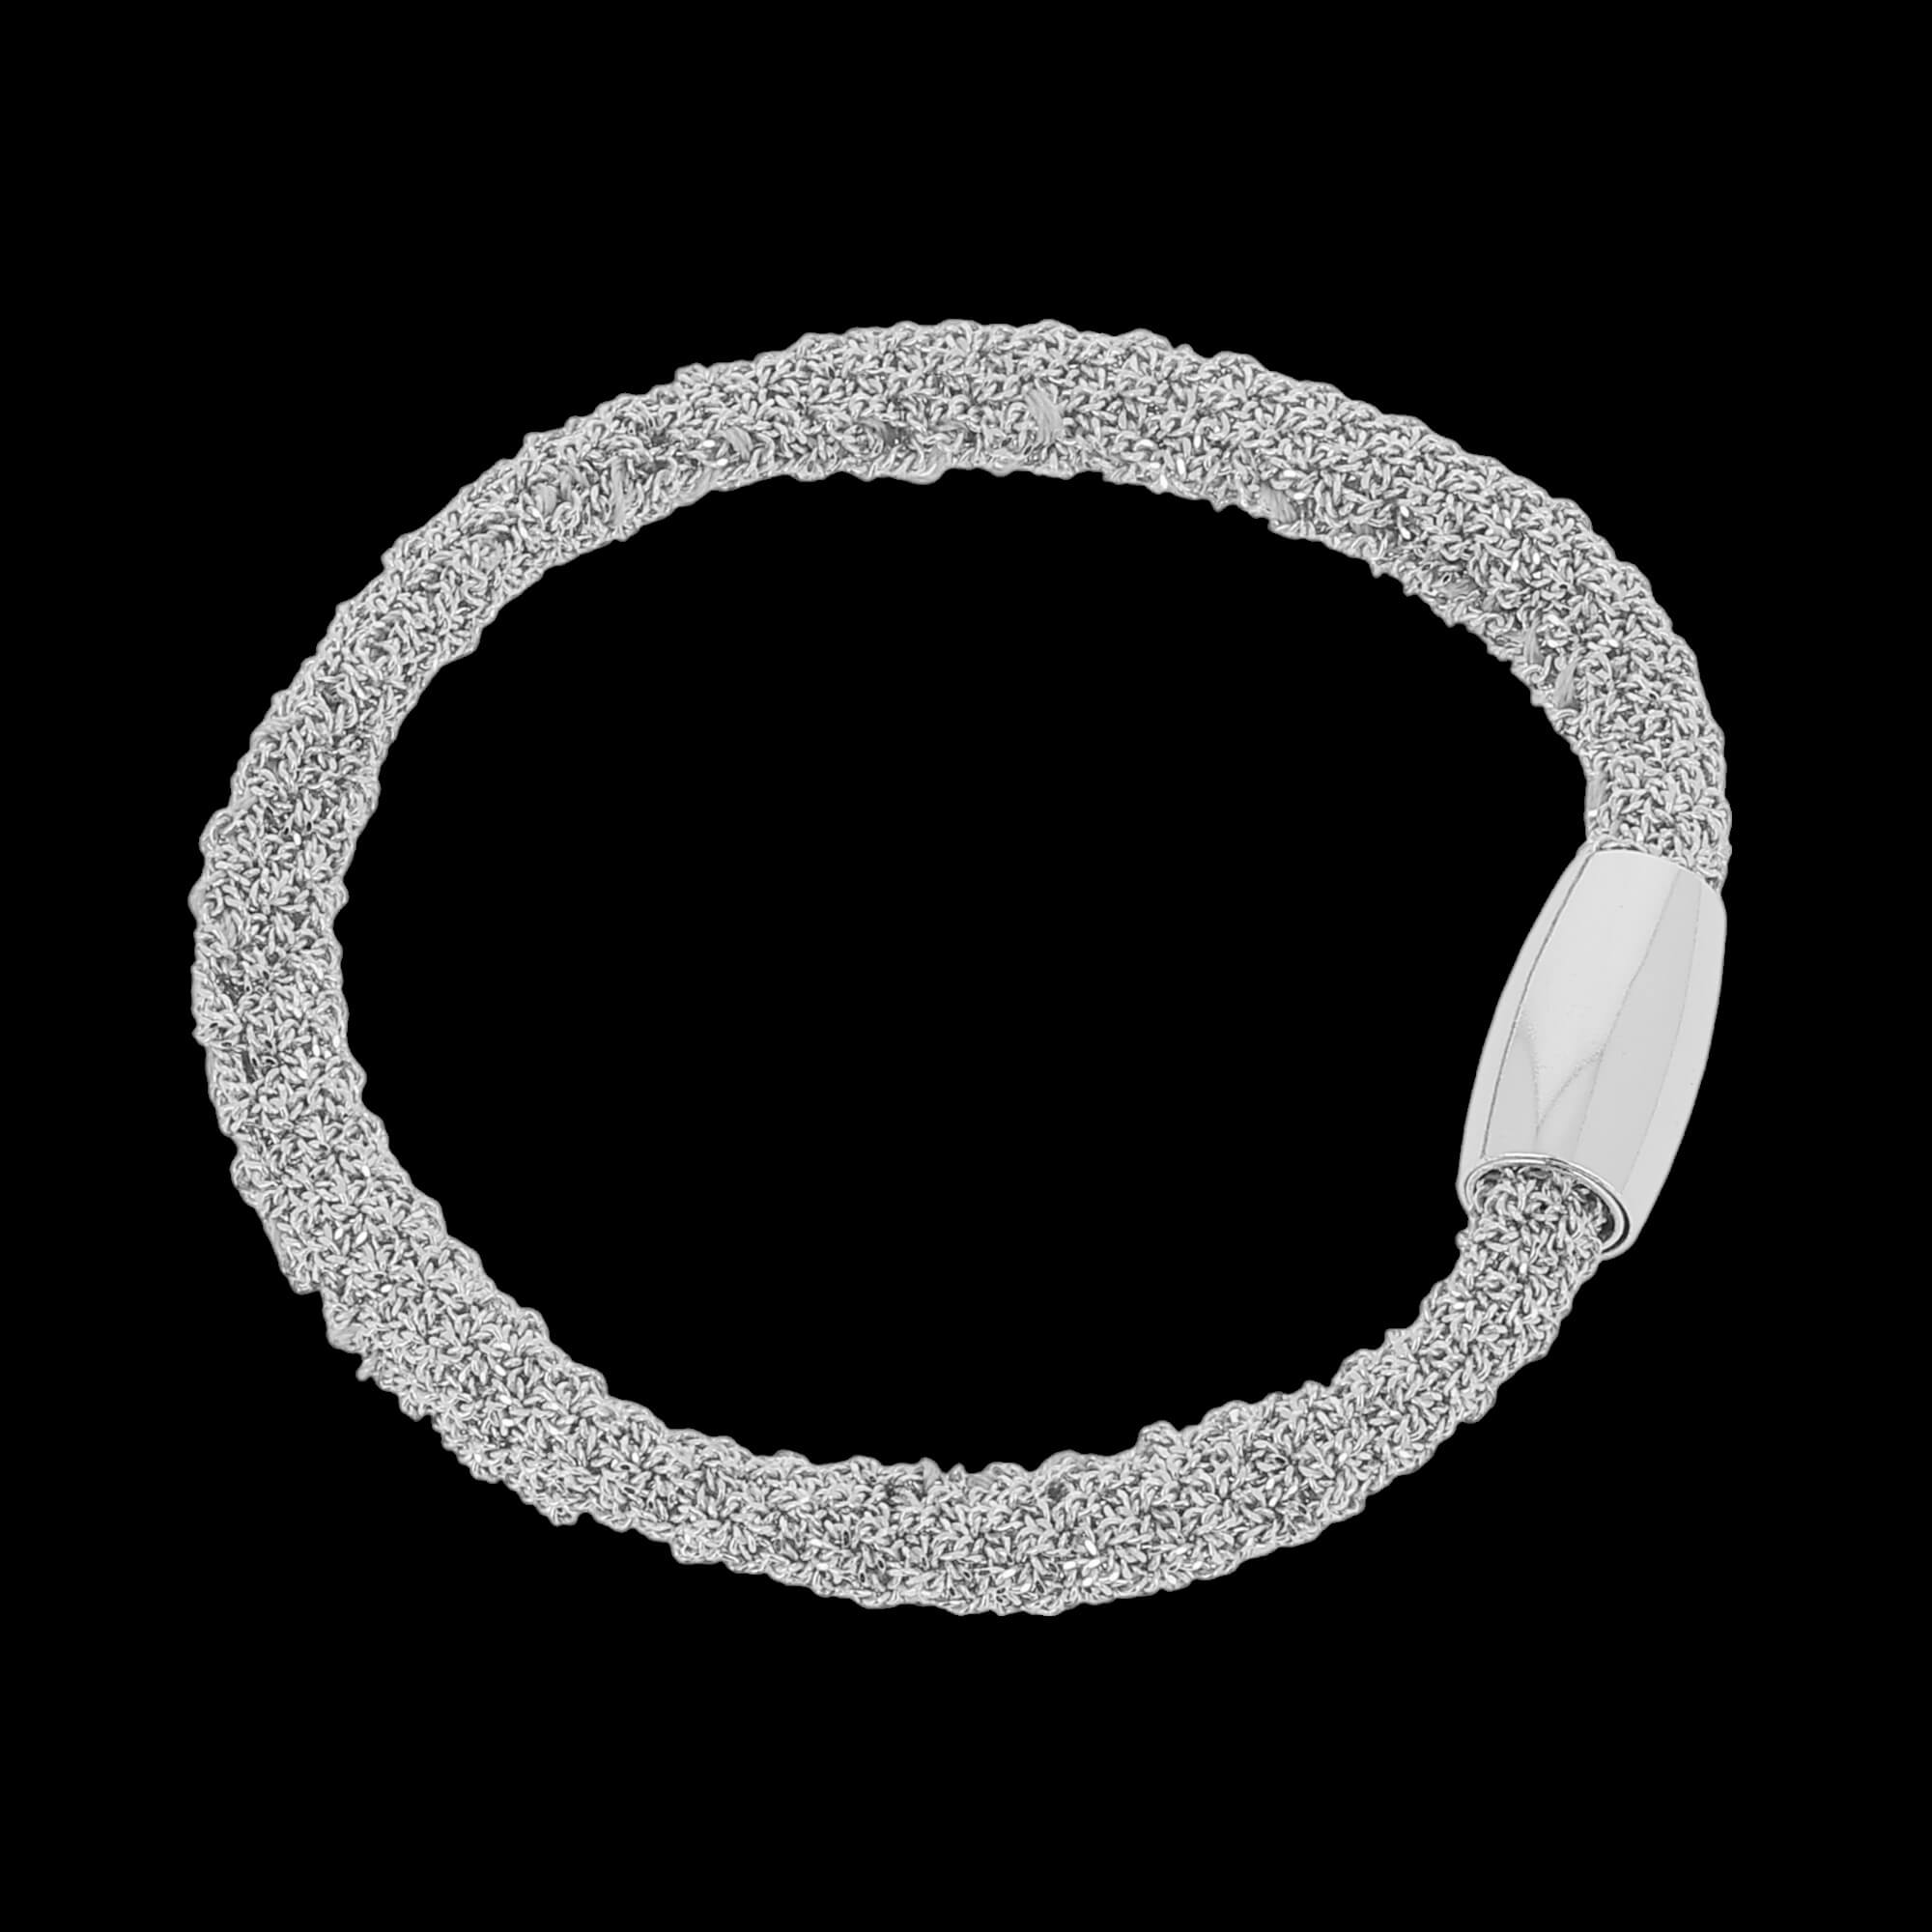 Narrow silver interwoven bracelet